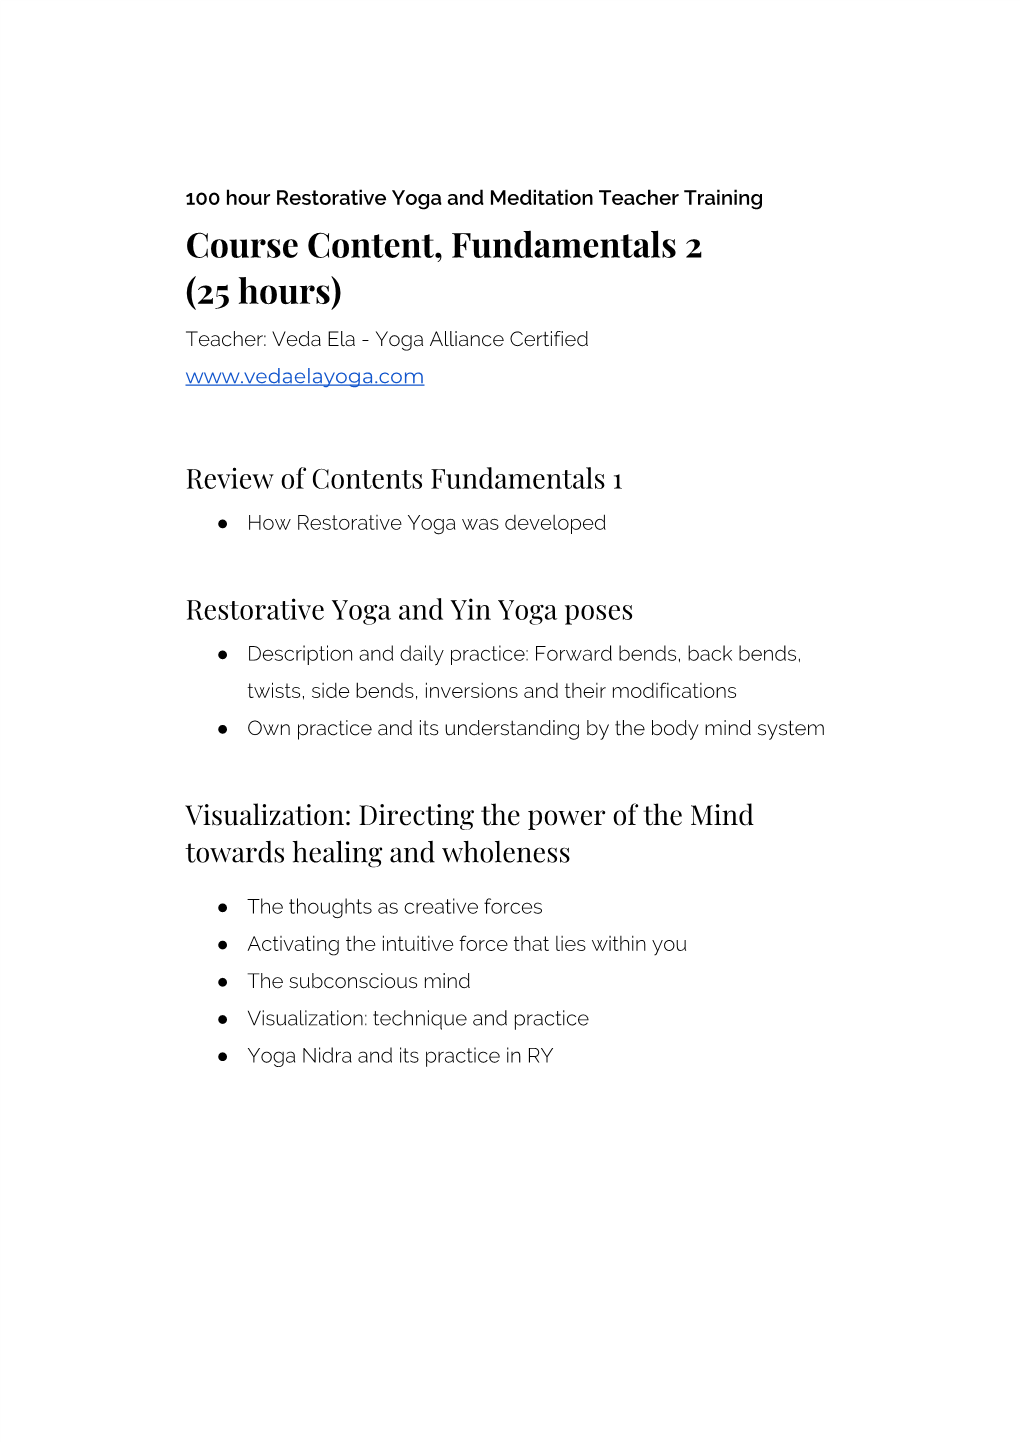 Course Content, Fundamentals 2 (25 Hours) Teacher: Veda Ela - Yoga Alliance Certified